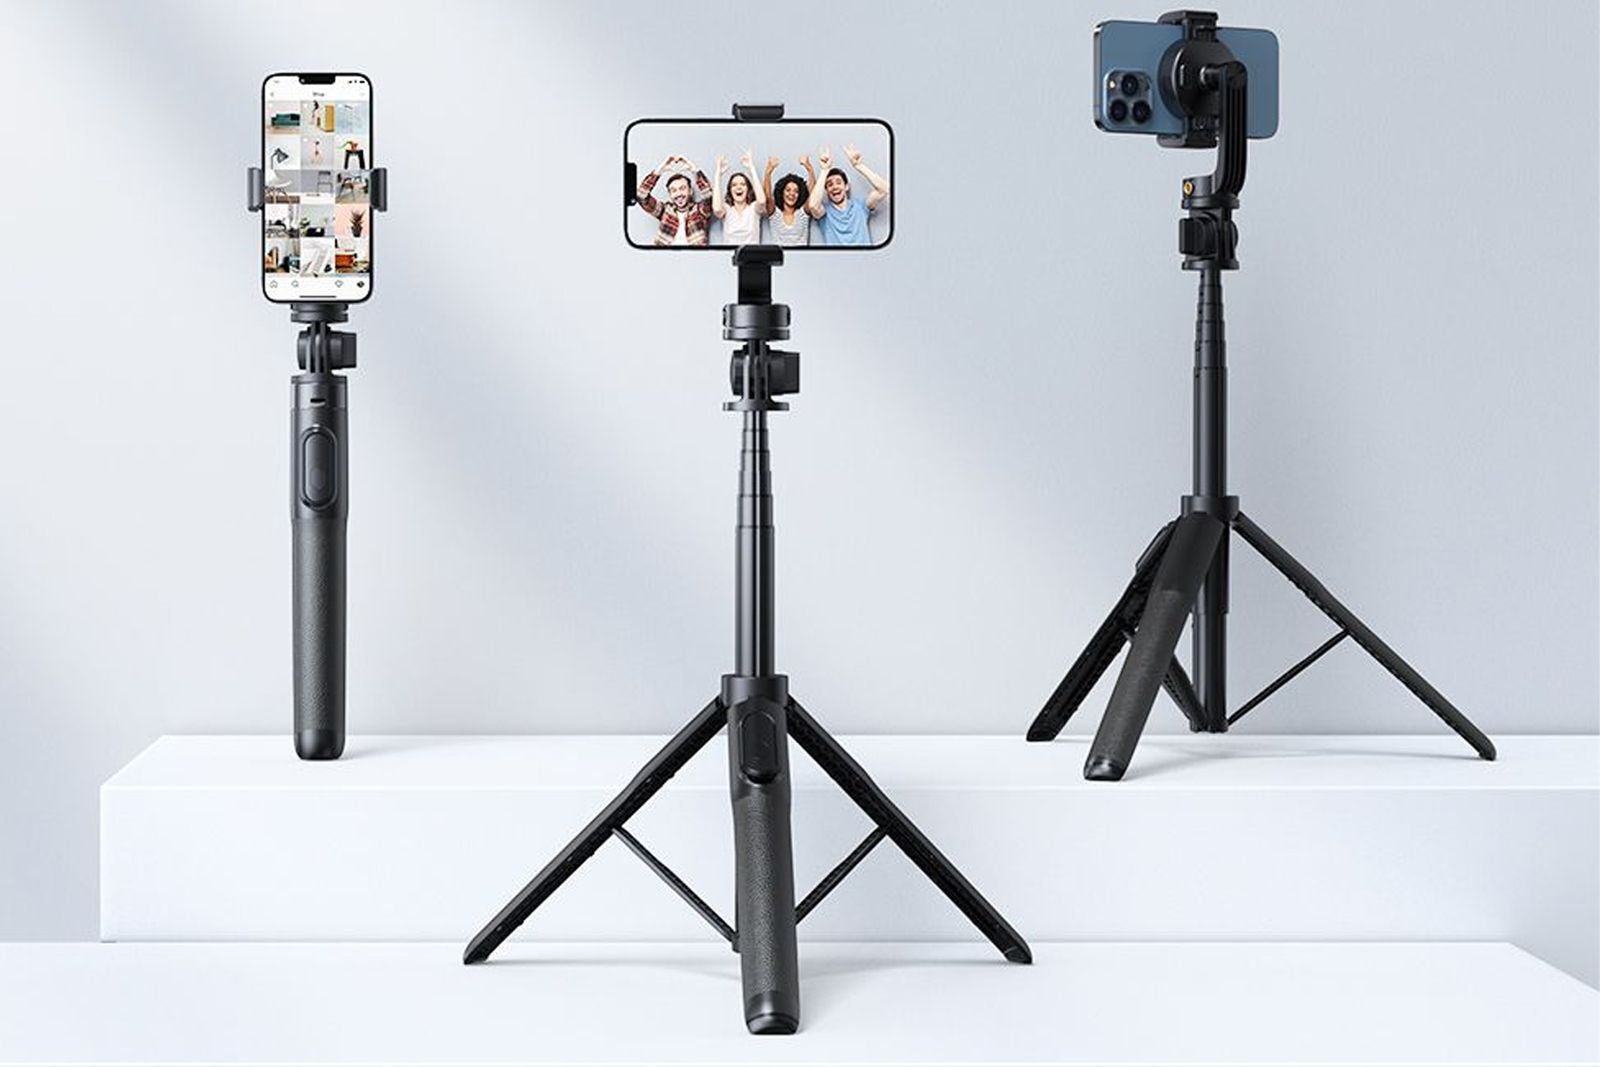 Andobil announces a Kickstarter campaign for its selfie stick/tripod combo photo 4